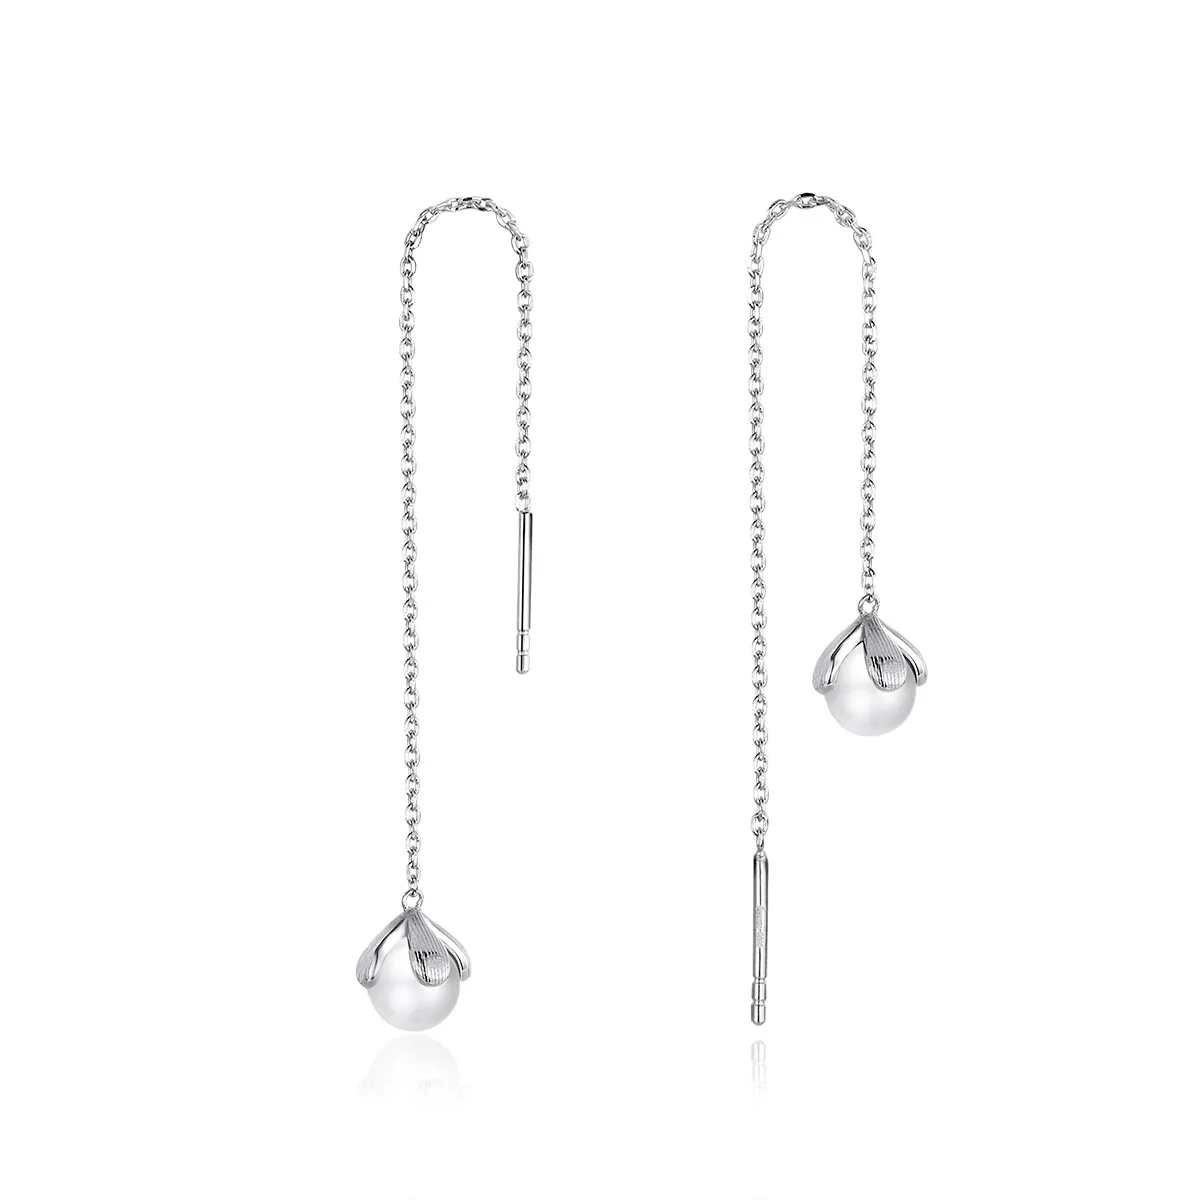 Pandora Style Silver Thread Pure Flowers Dangle Earrings - BSE373